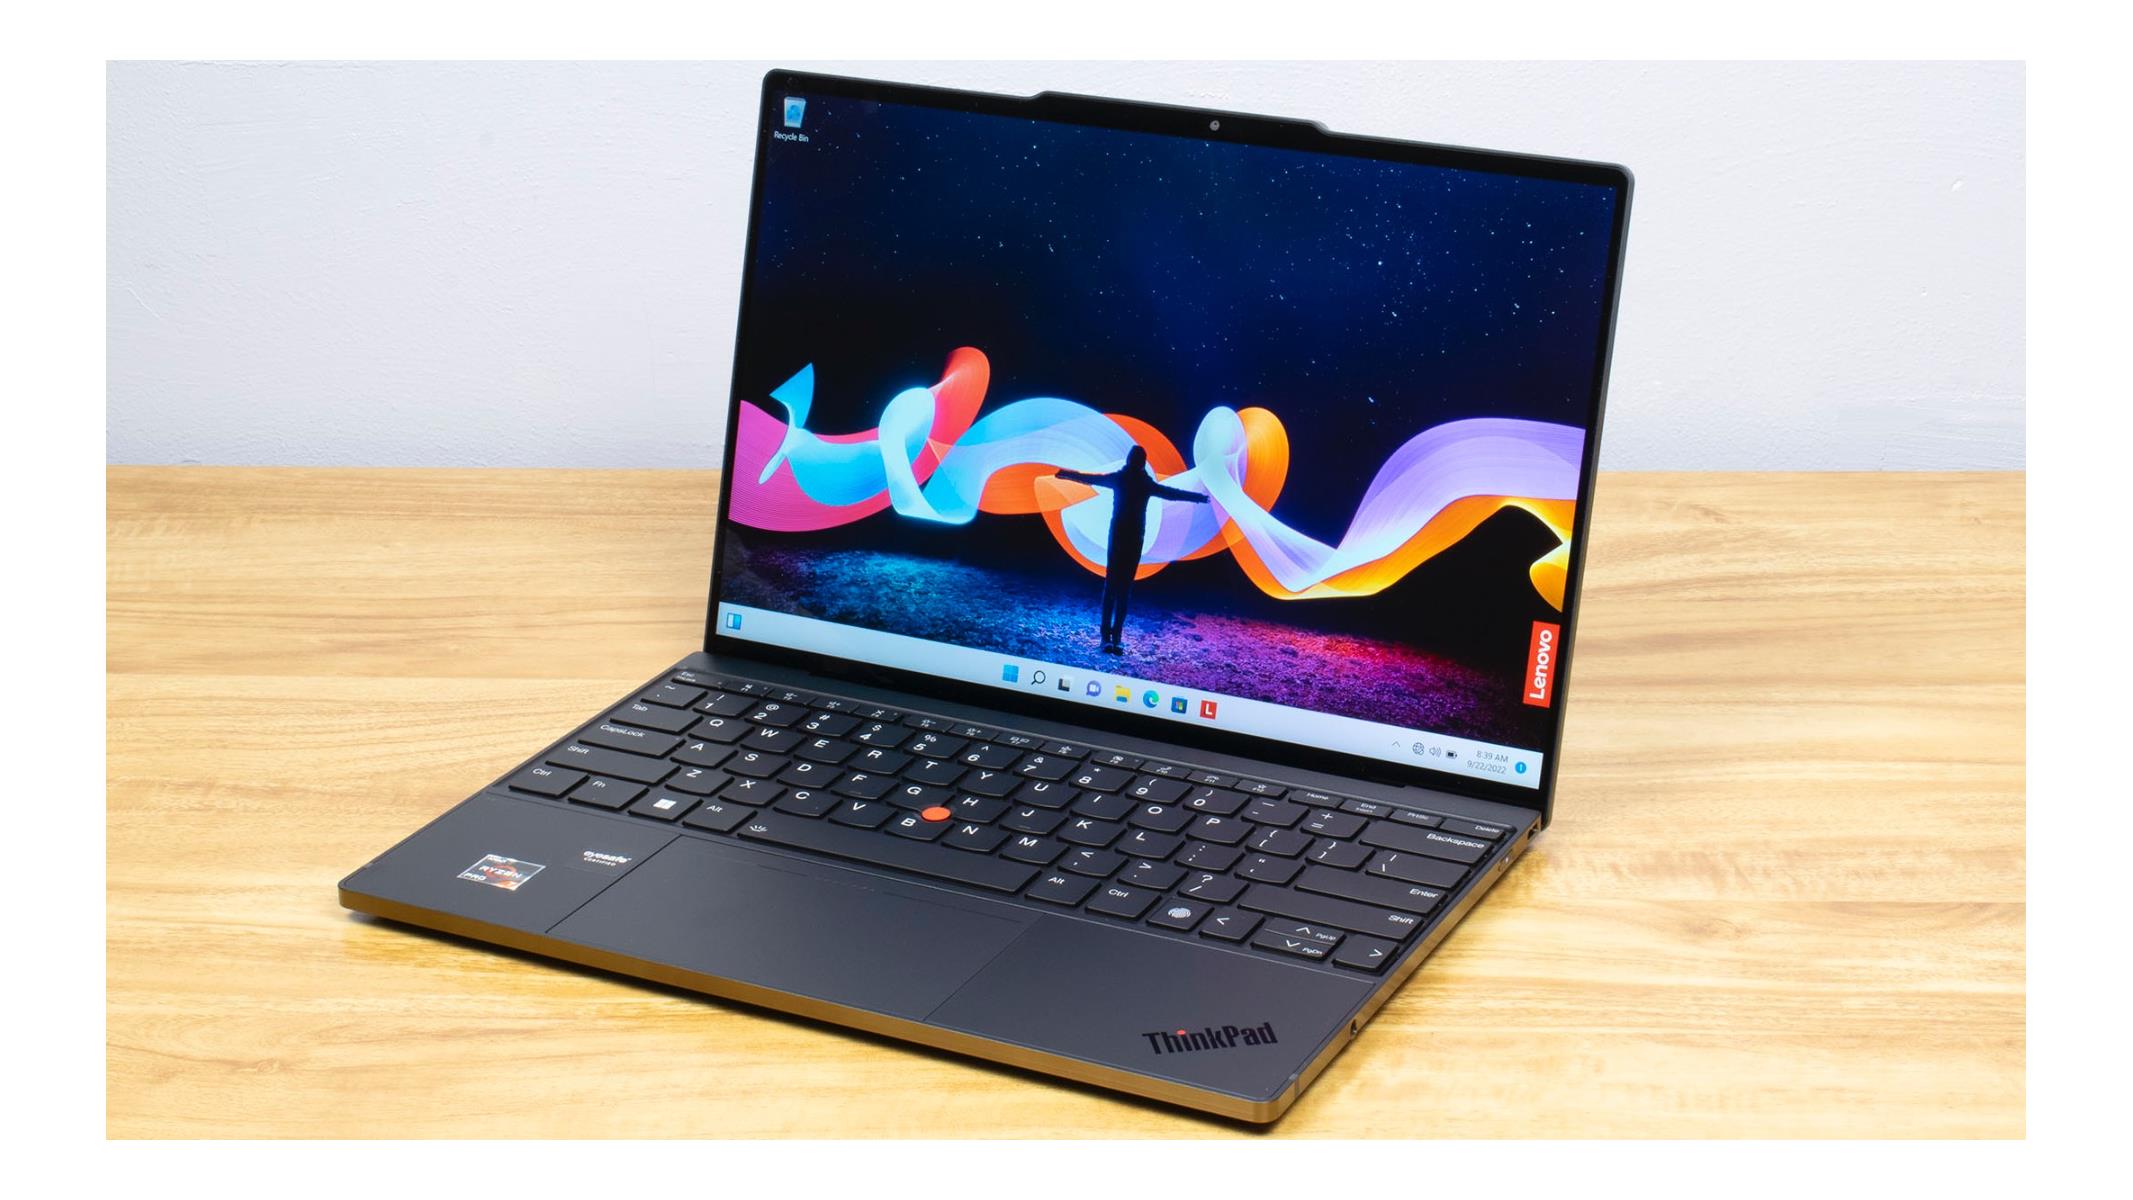 Lenovo ThinkPad Z13 Review: A Sleek, Fast Ryzen Pro Laptop | HotHardware